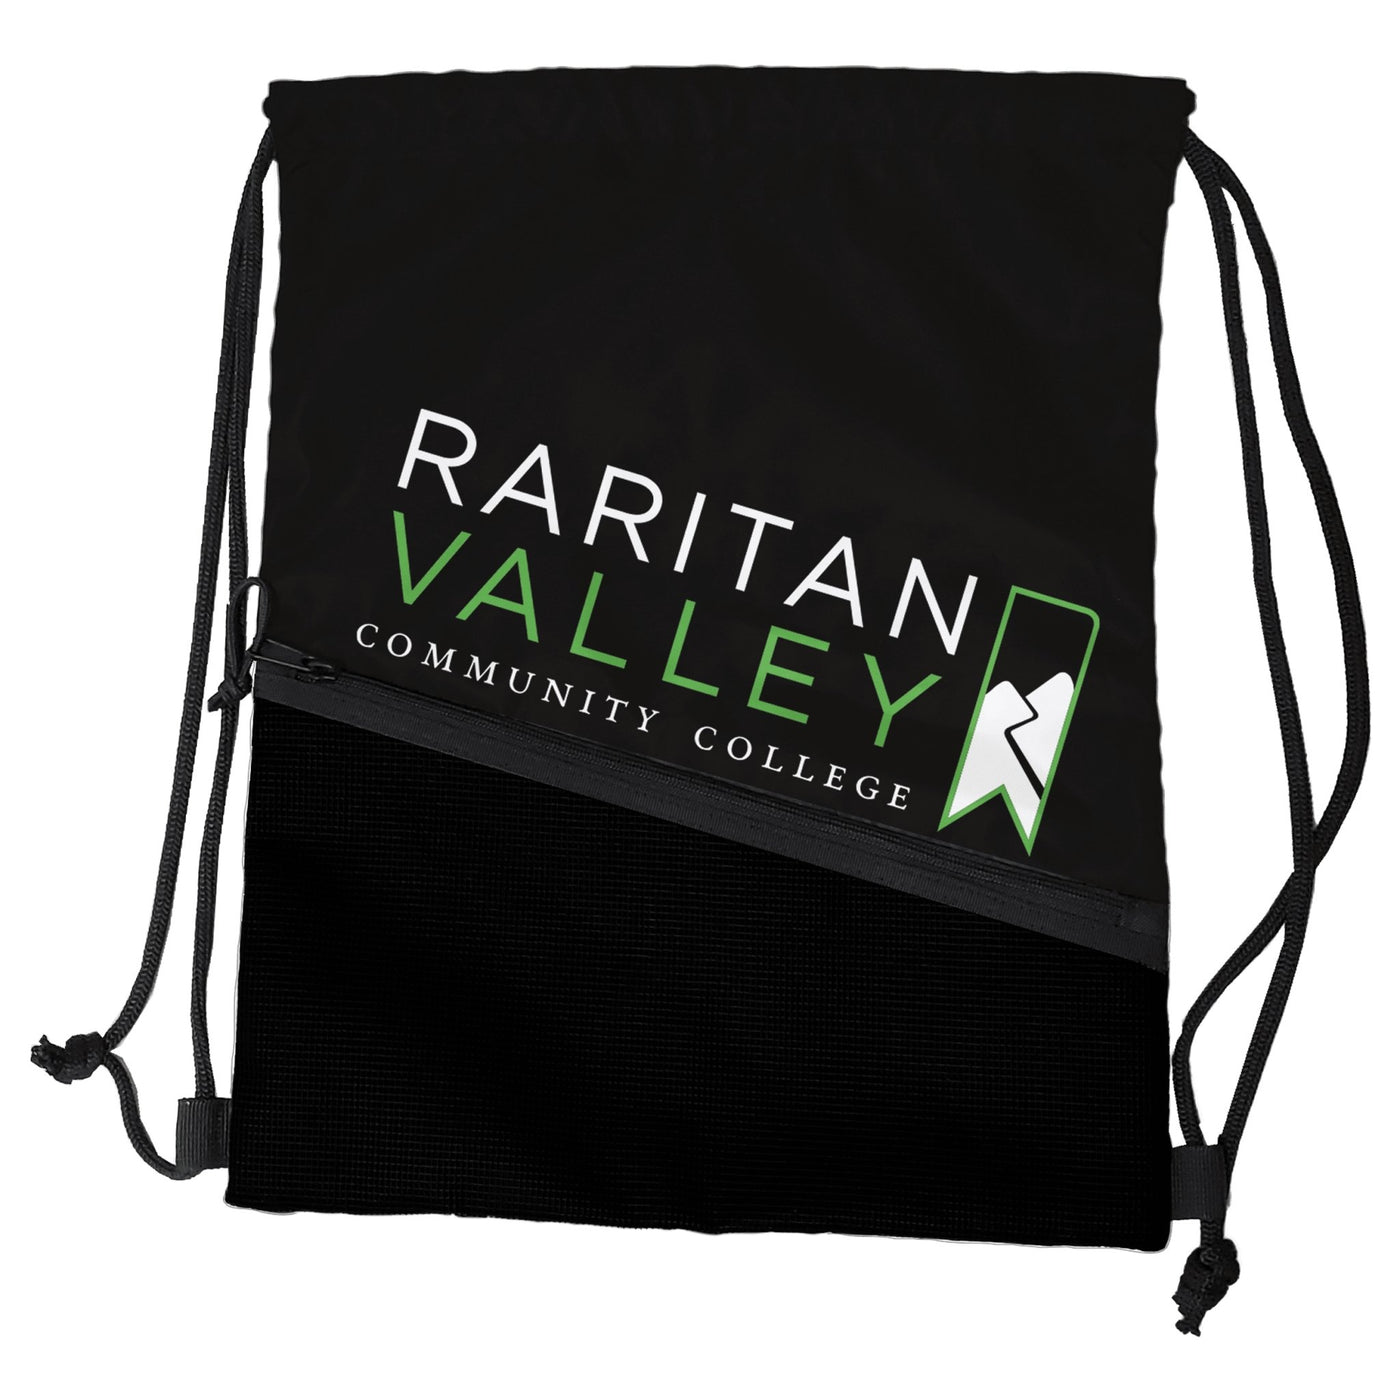 RARITAN VALLEY COMMUNITY COLLEGE Tilt Backsack - Logo Brands